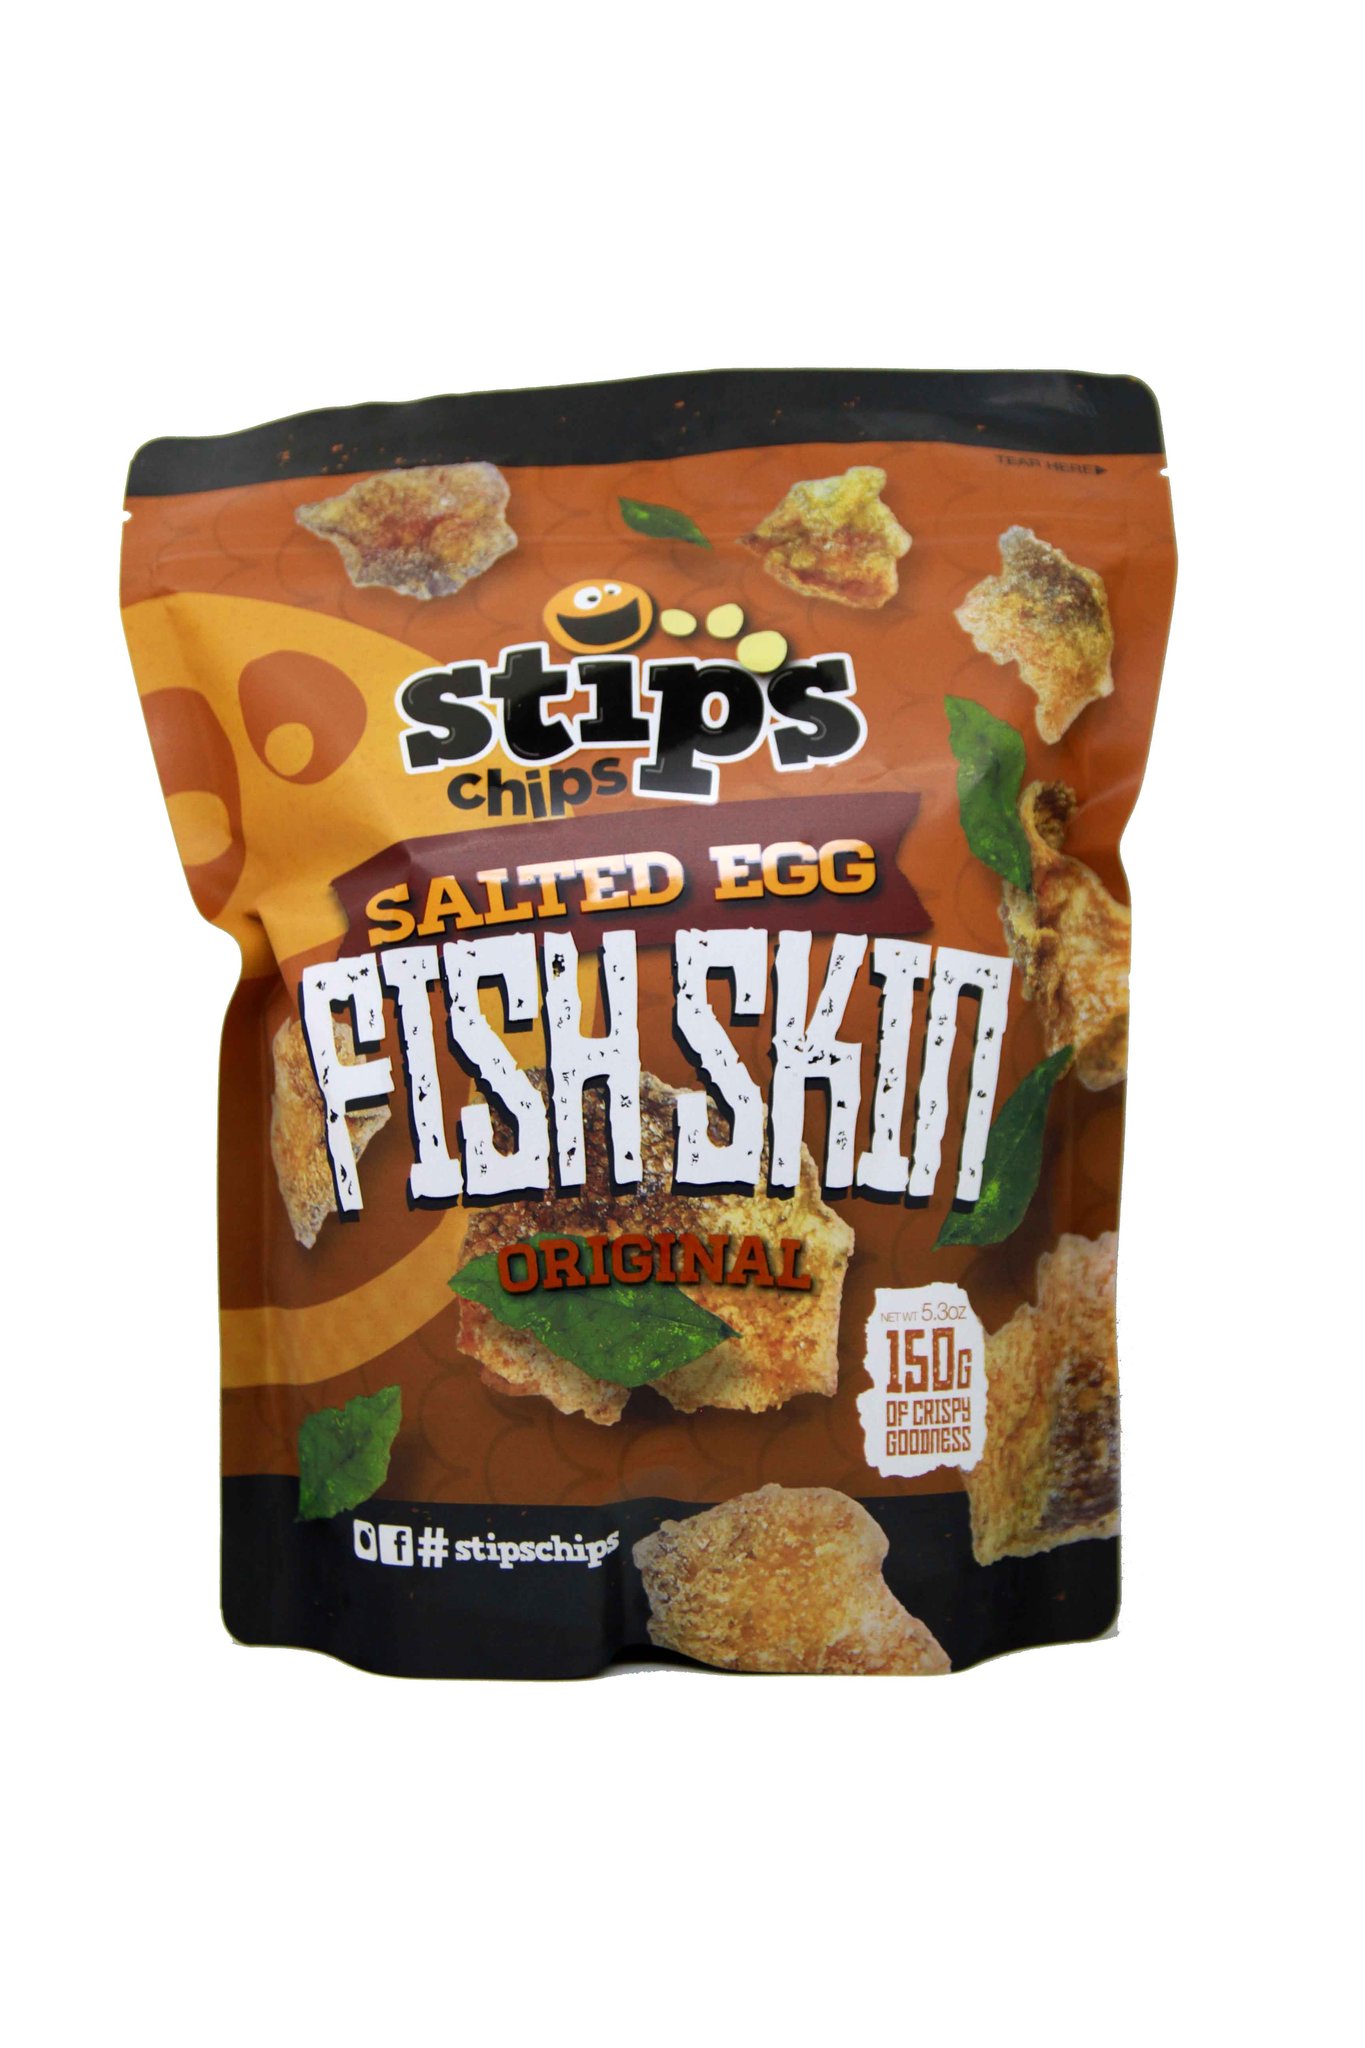 Stip's Chips Salted Egg Fish Skin Original 150g – Stips Chips